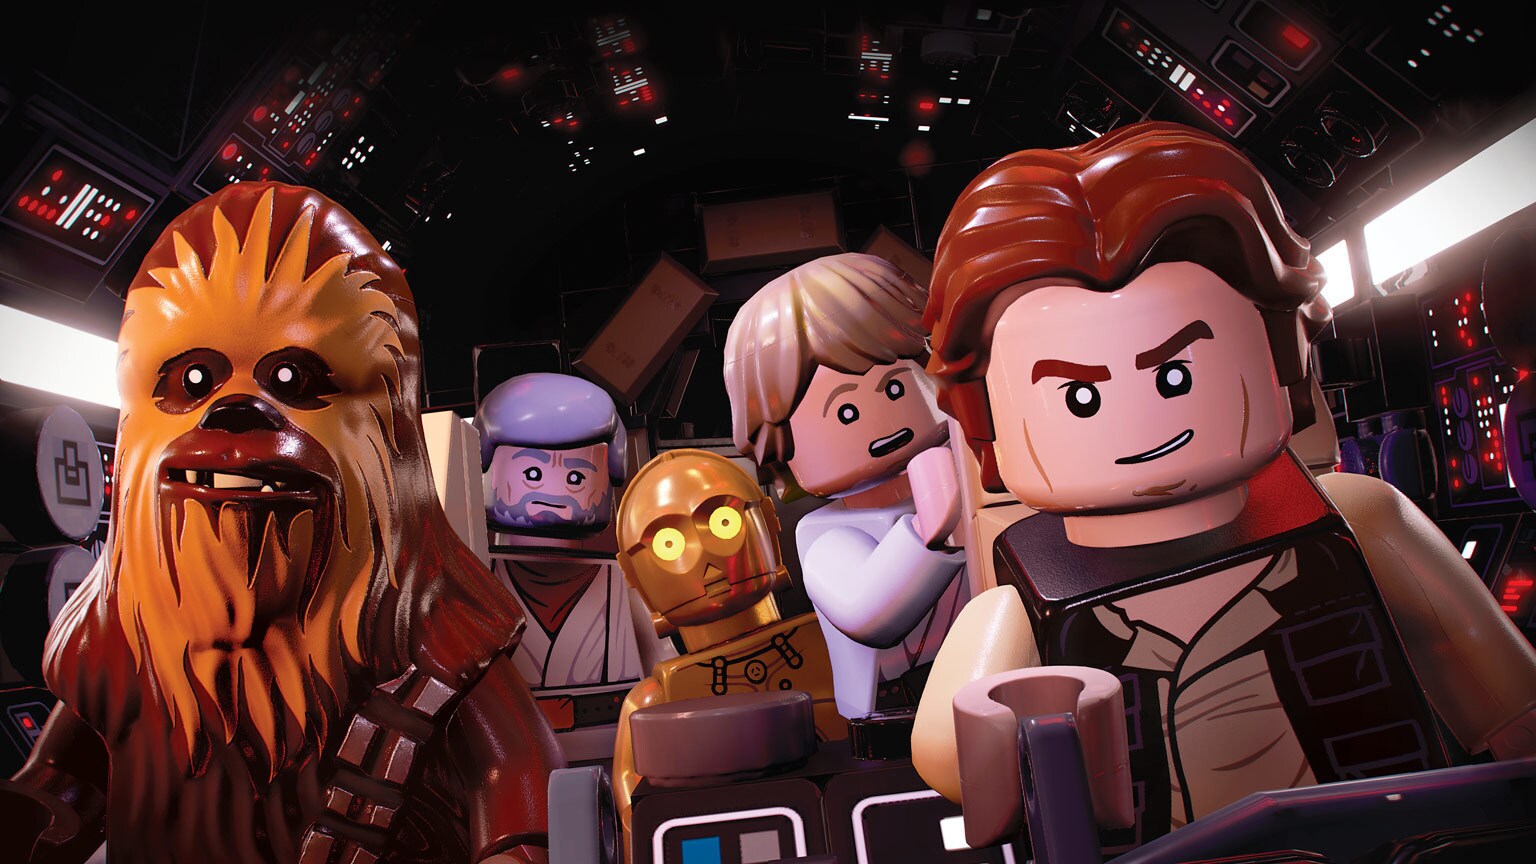 LEGO Star Wars: The Skywalker Saga - Official Launch Trailer 